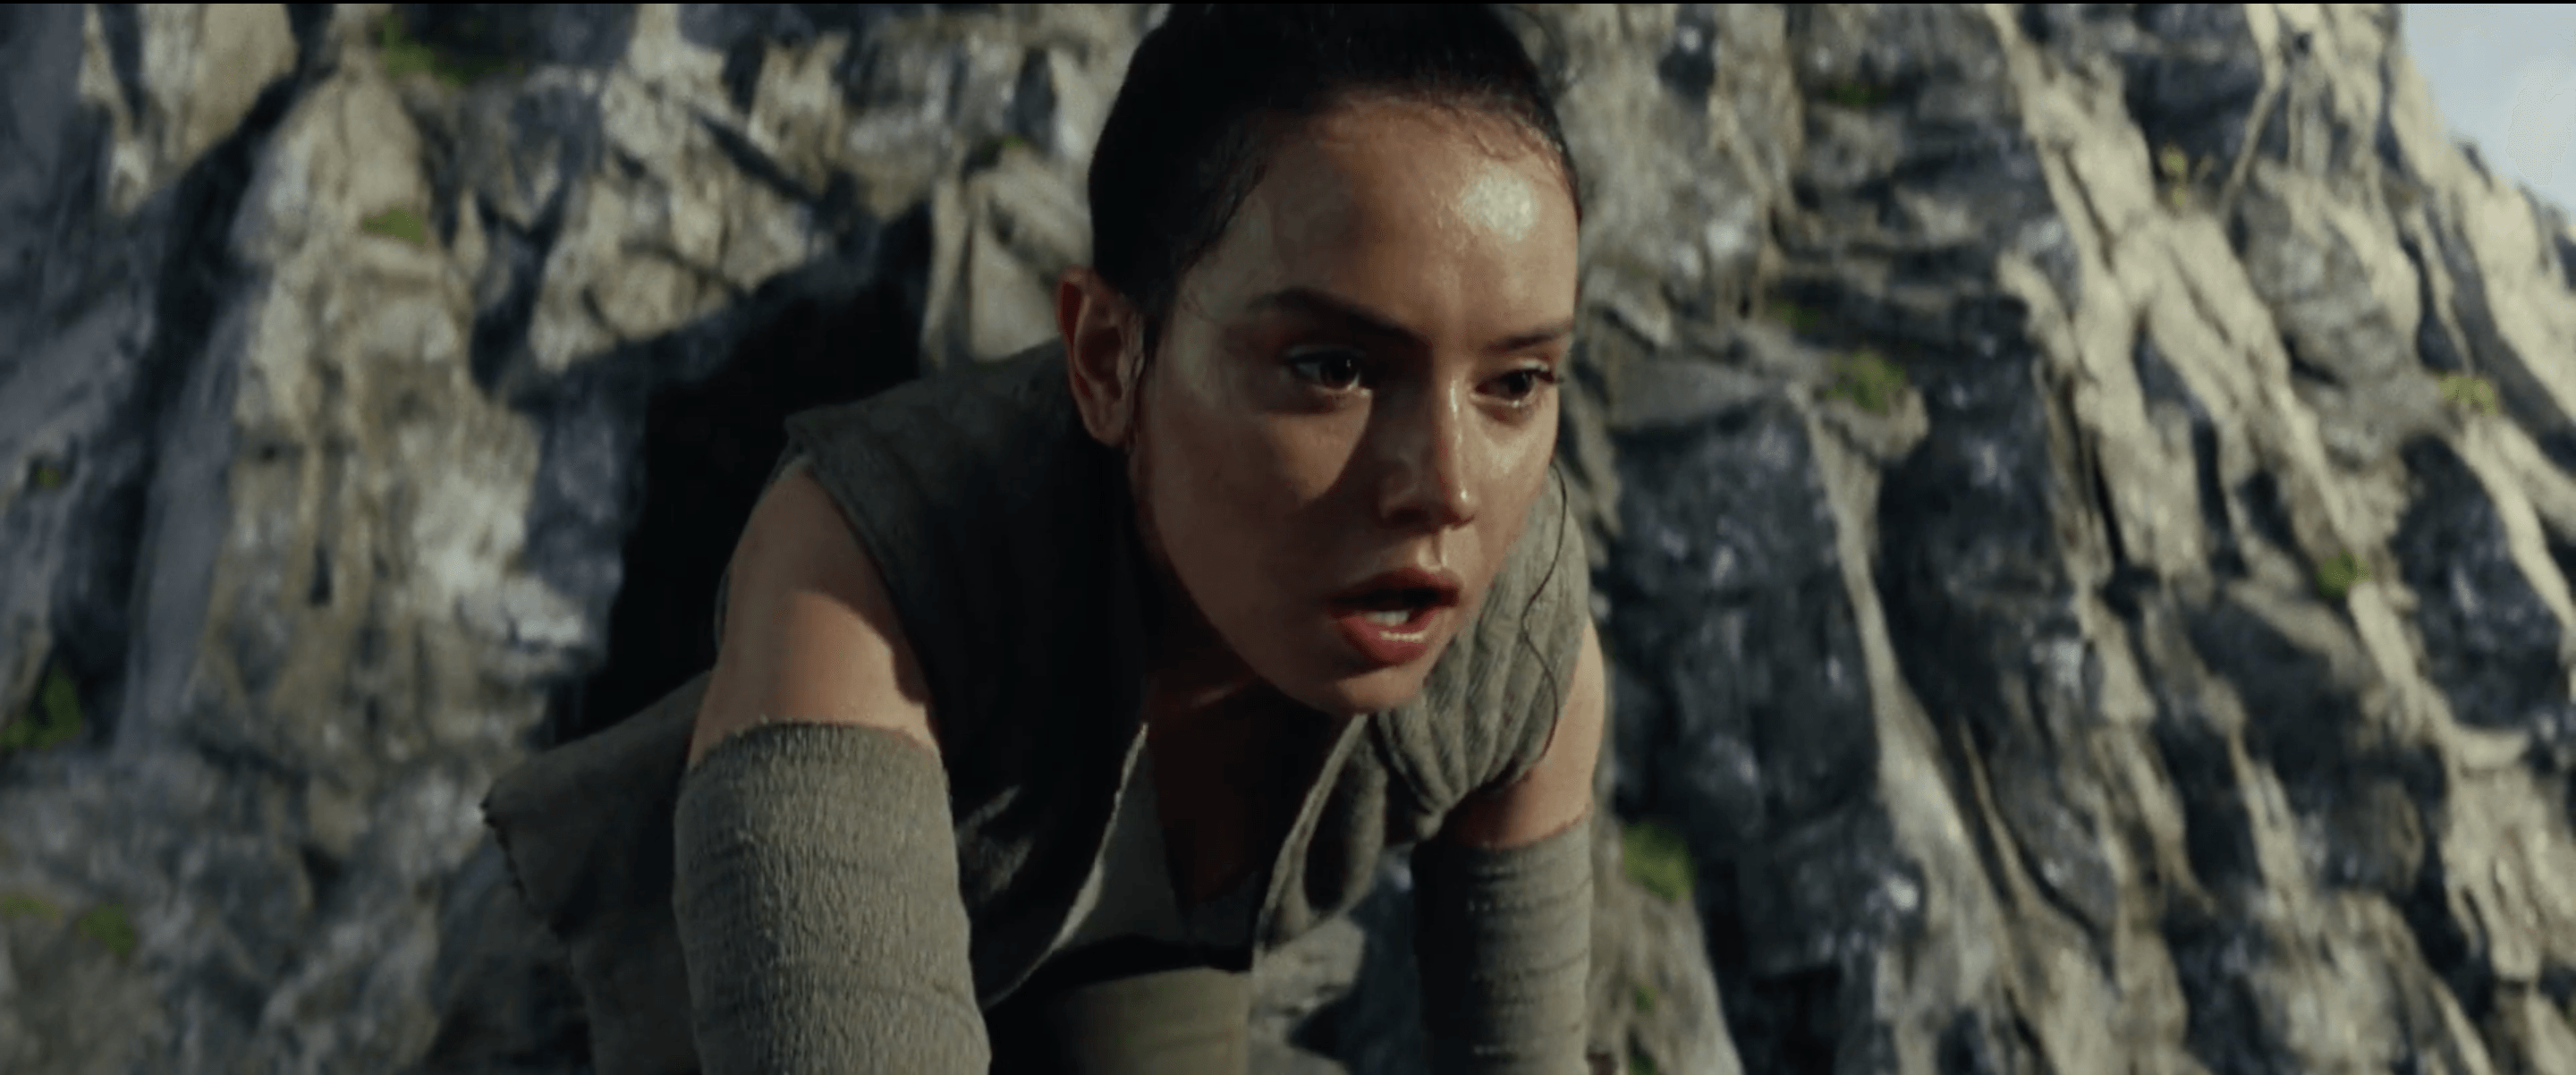 Star Wars: The Last Jedi Teaser at Star Wars Celebration Orlando 2017